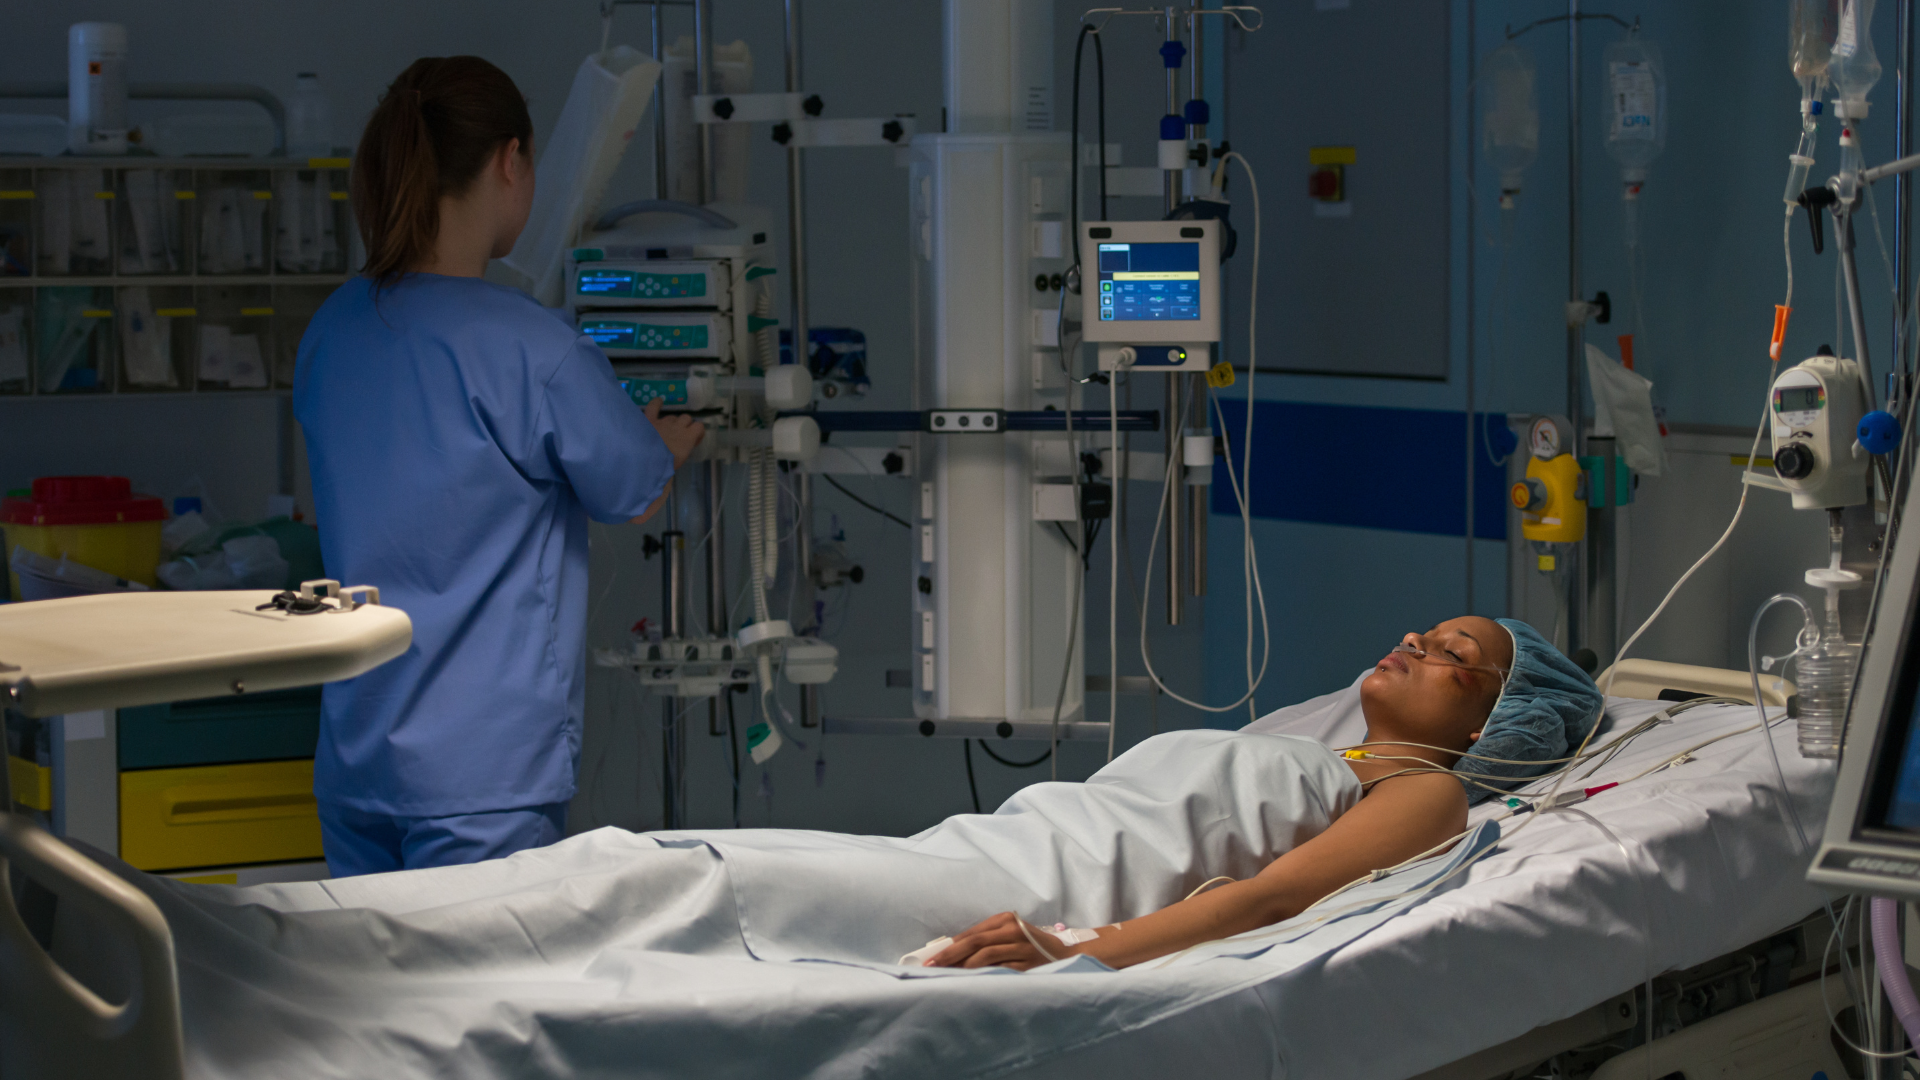 A night shift nurse monitors an injured patient's vitals.